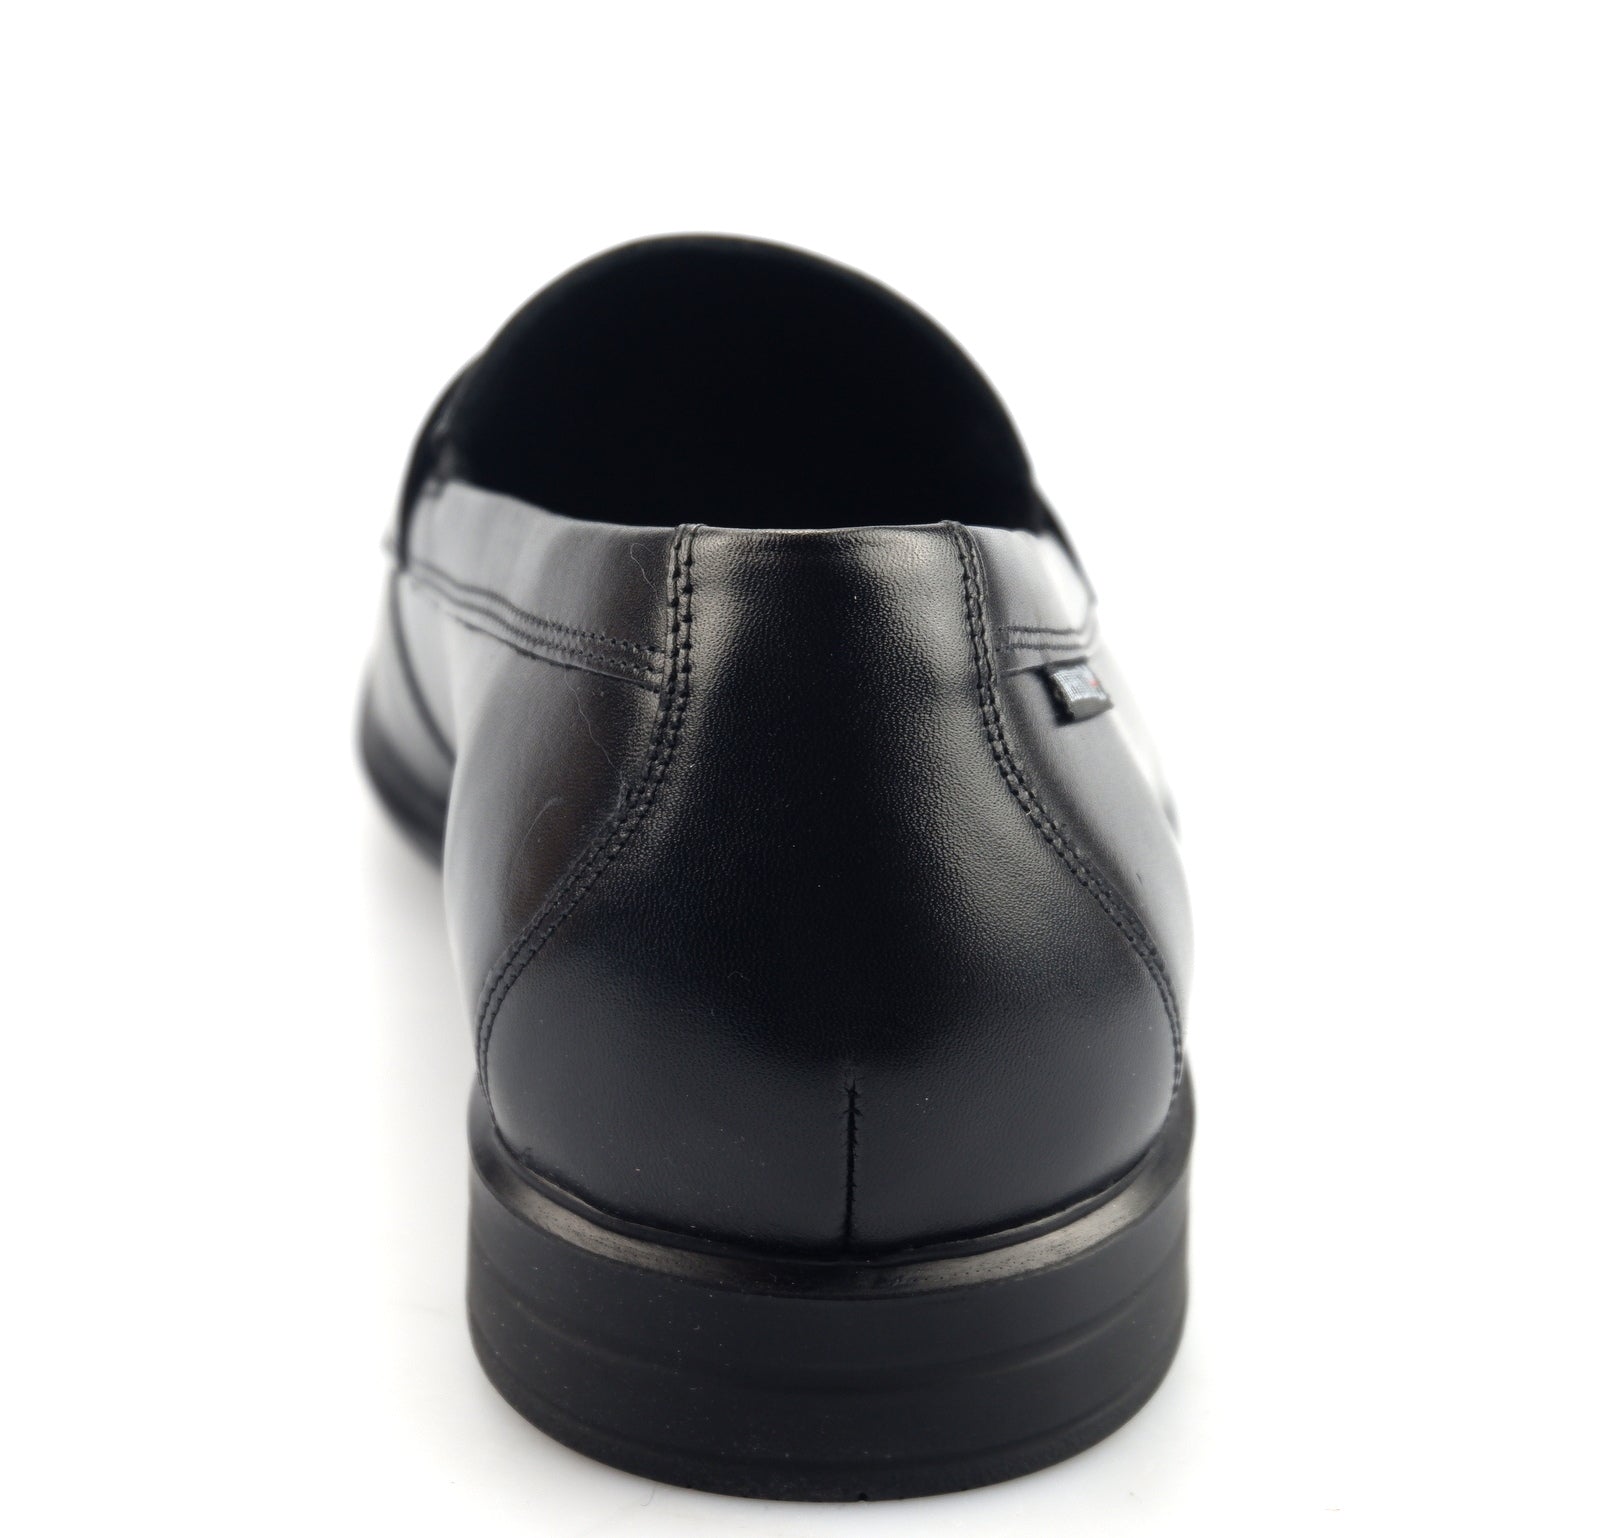 Mephisto ERIC black leather loafer for men - ChaplinshoesMephisto ERIC black leather loafer for menMephisto